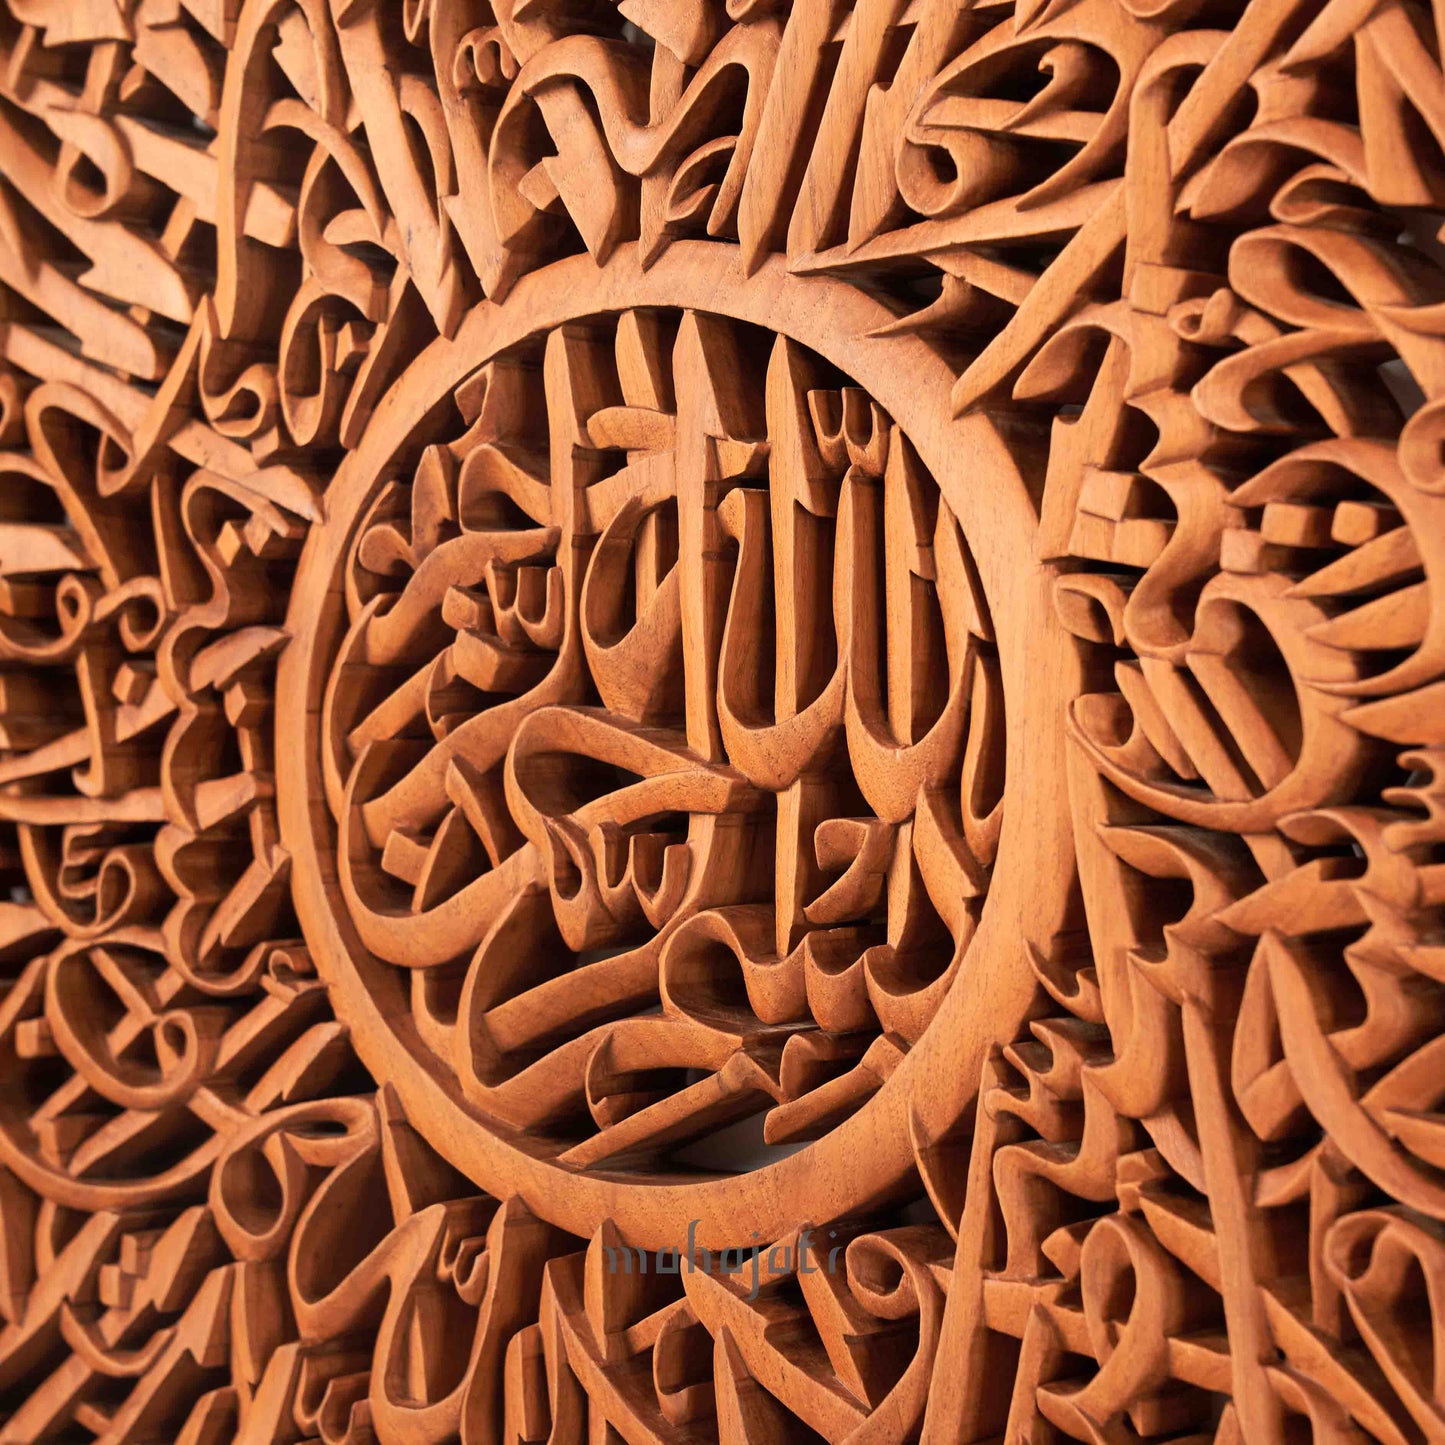 Ayatul Kursi / Bismillah Wall Art, Home Decor, and Gift by Mahajati